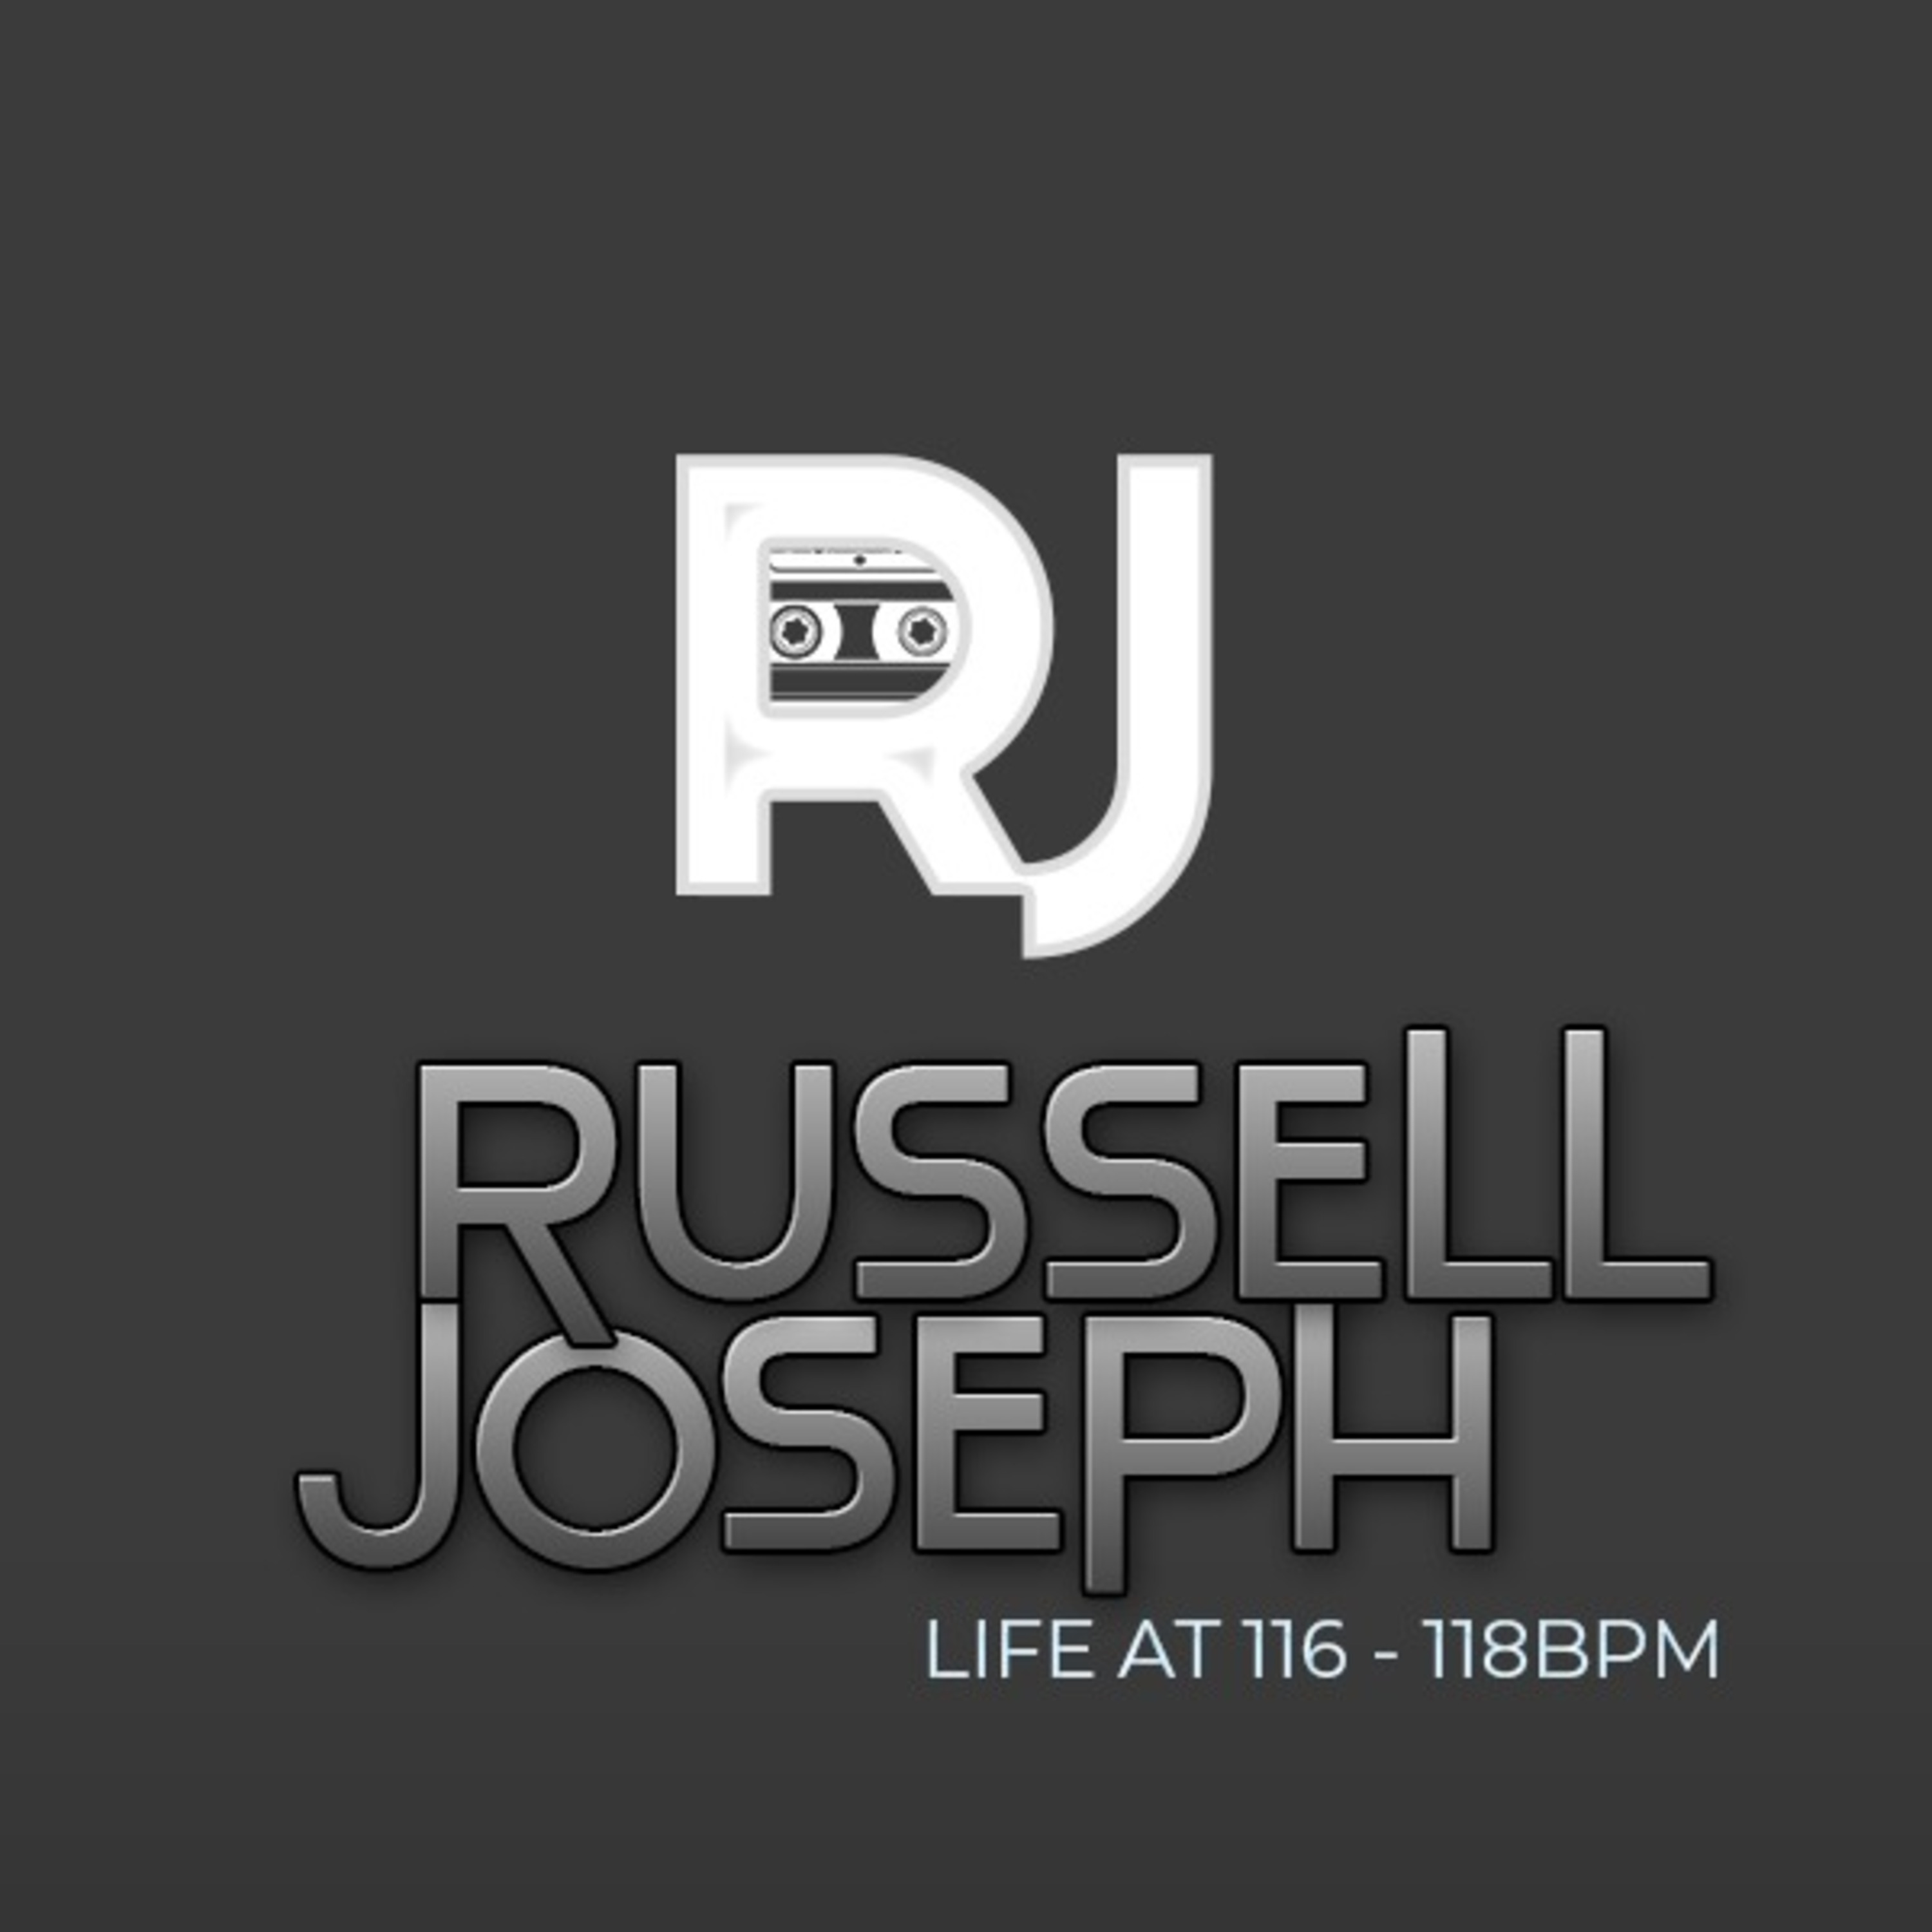 Life at 116-118bpm - Russell Joseph